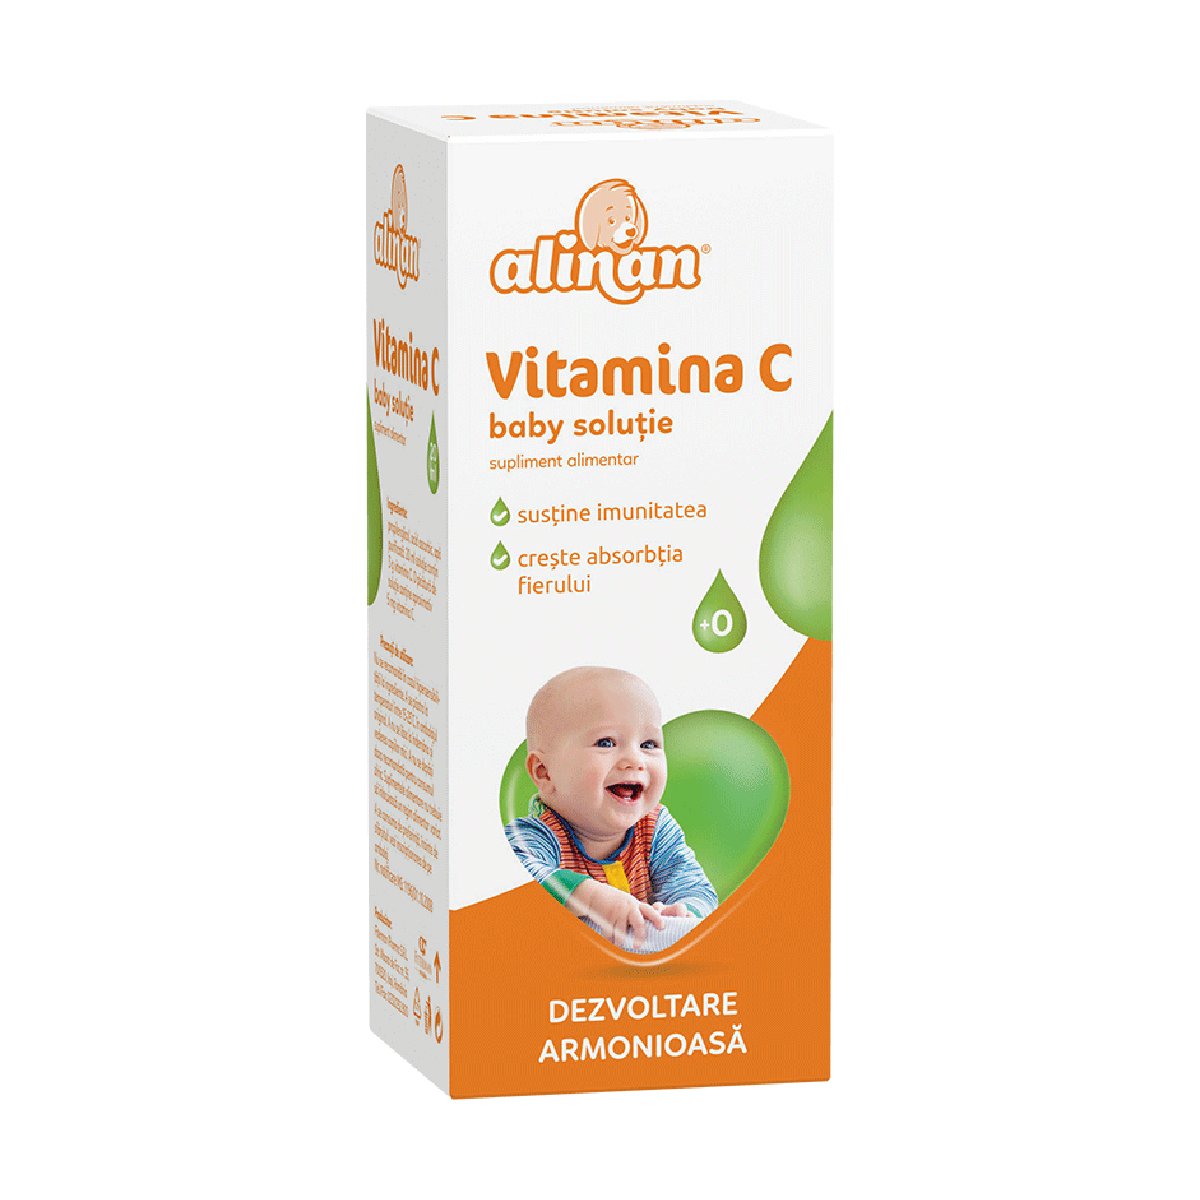 Vitamina C baby solutie, 20 ml, Alinan Alinan